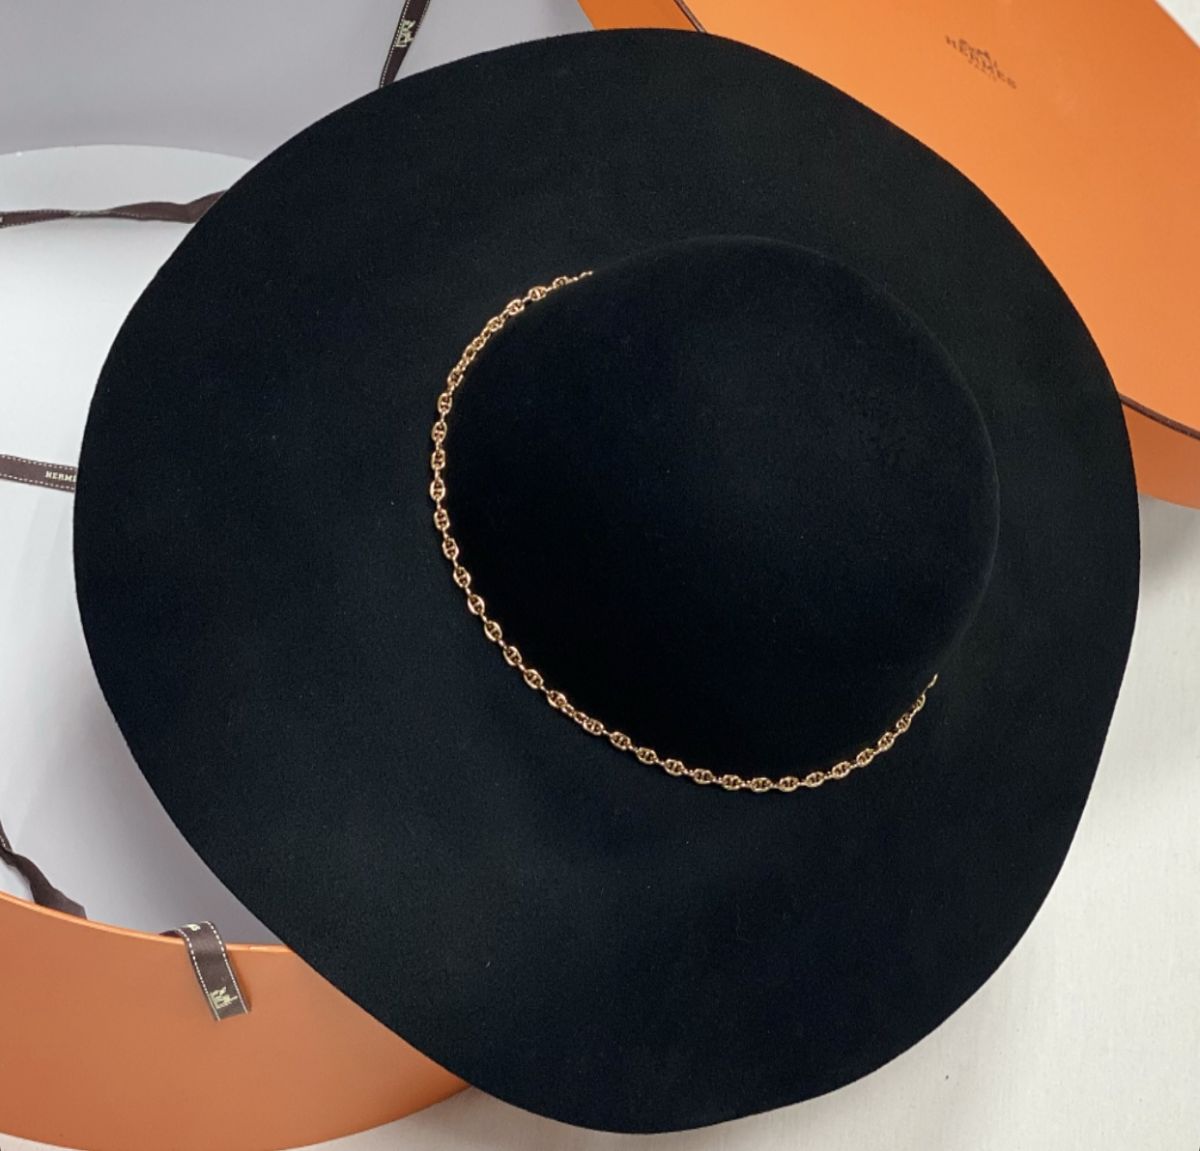 Шляпа Hermès размер 59 цена 61 540 руб 